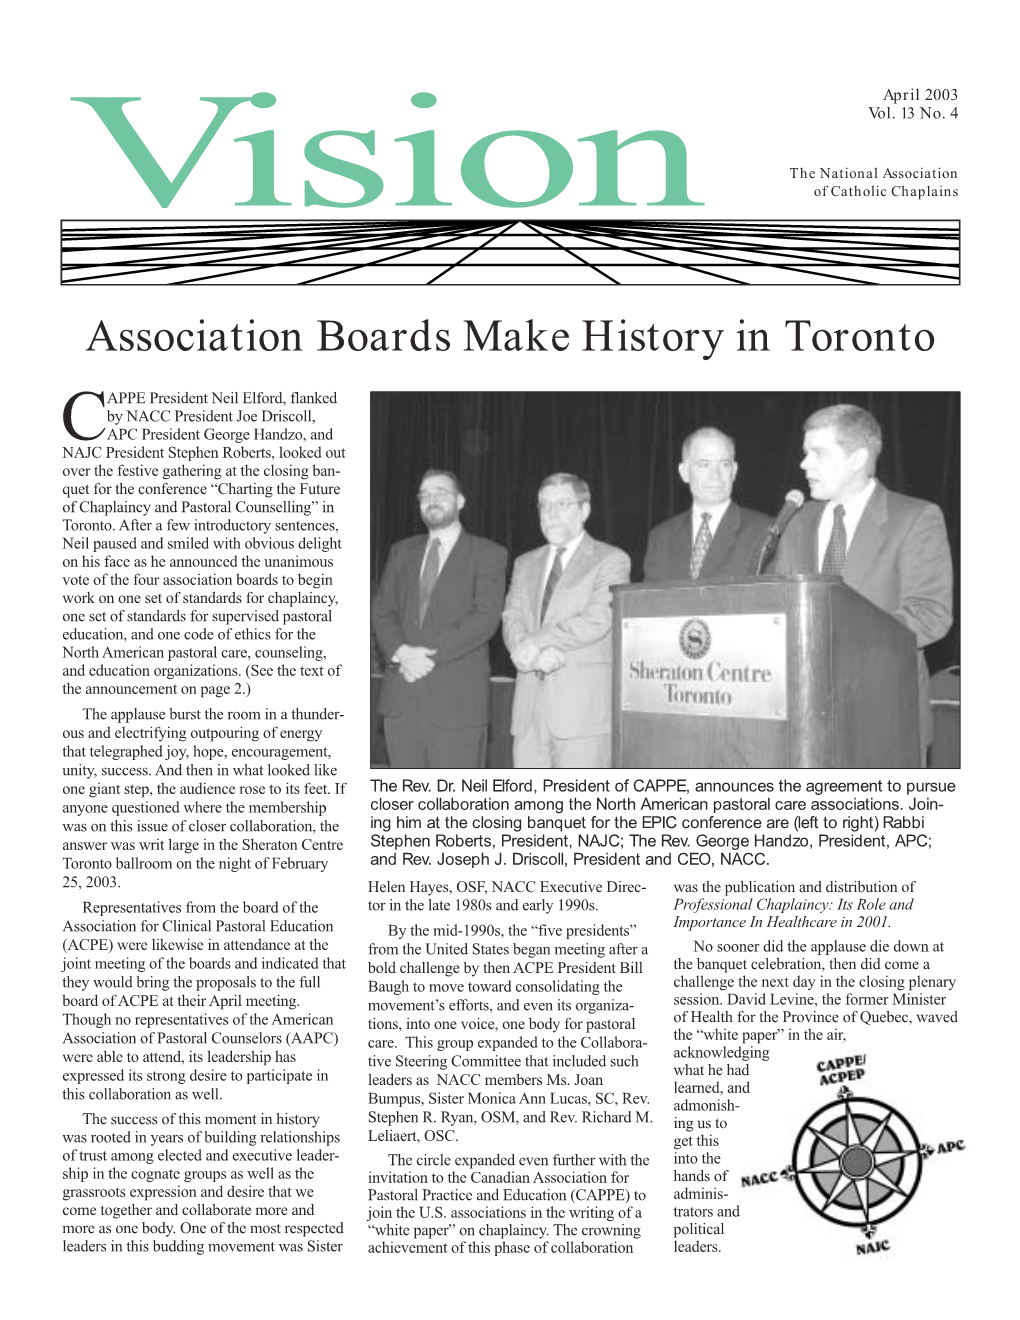 Association Boards Make History in Toronto